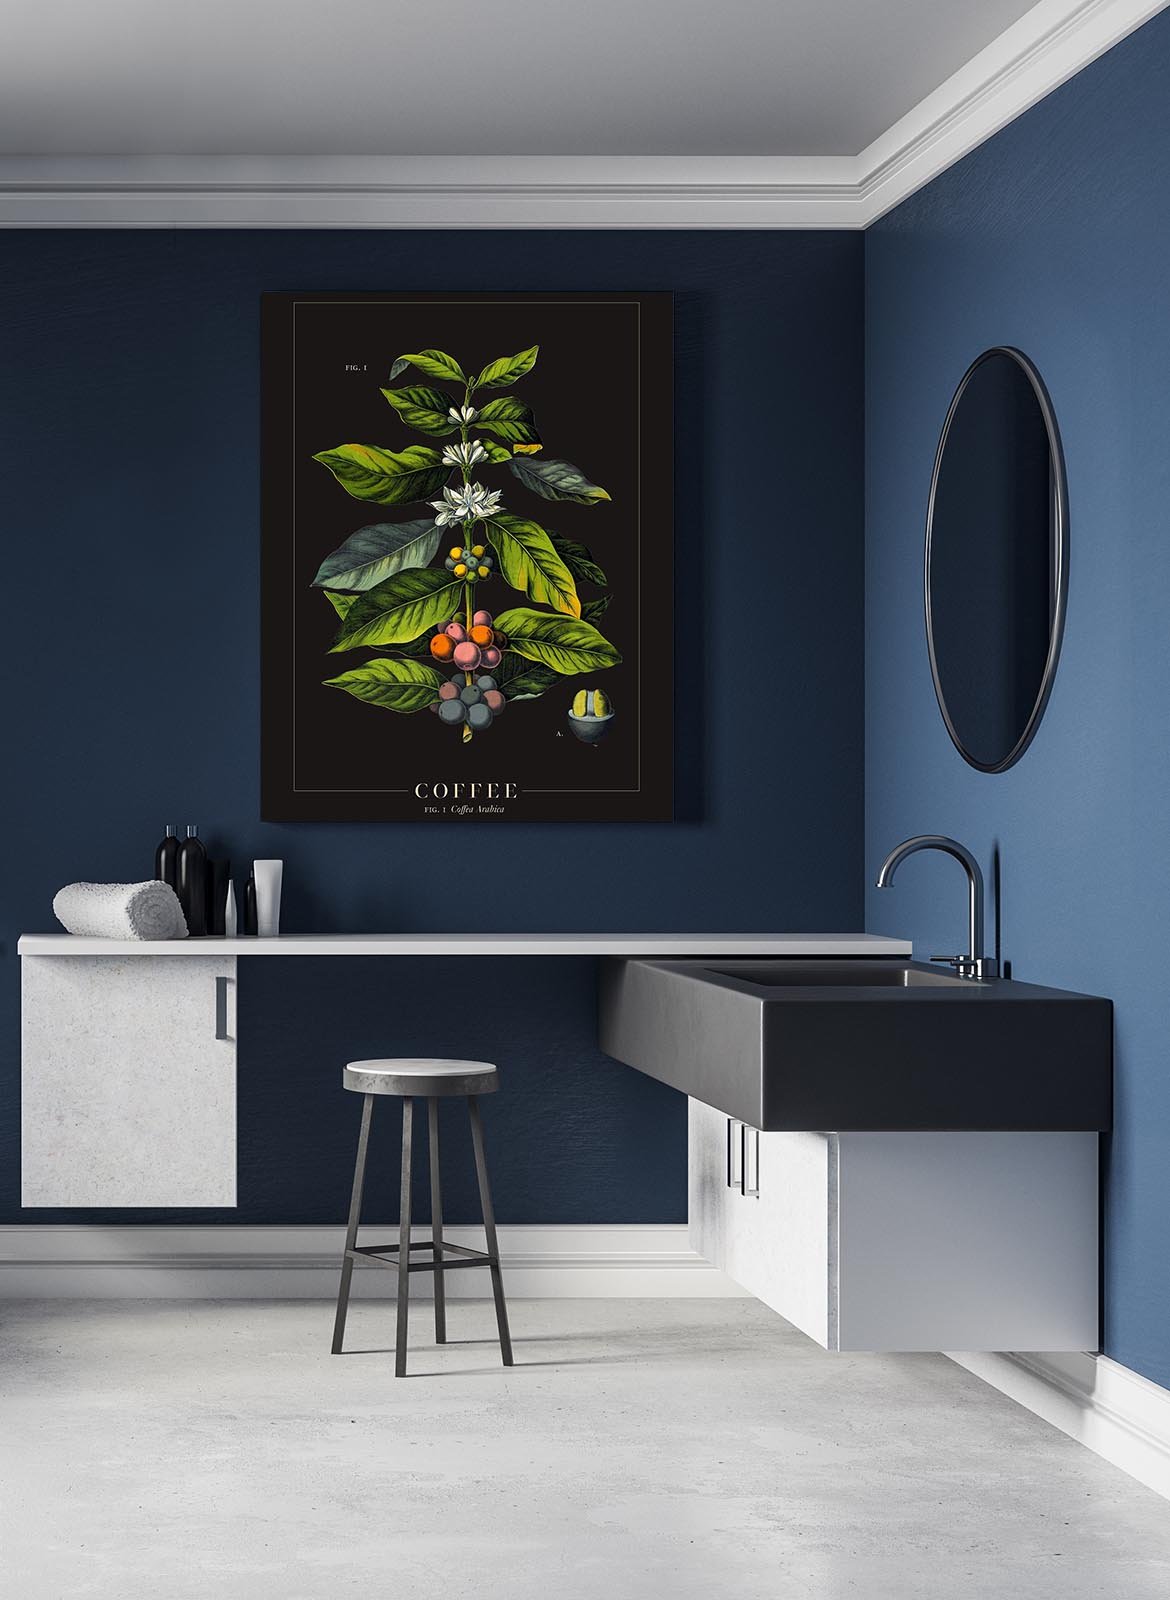 Coffee Botanical Poster